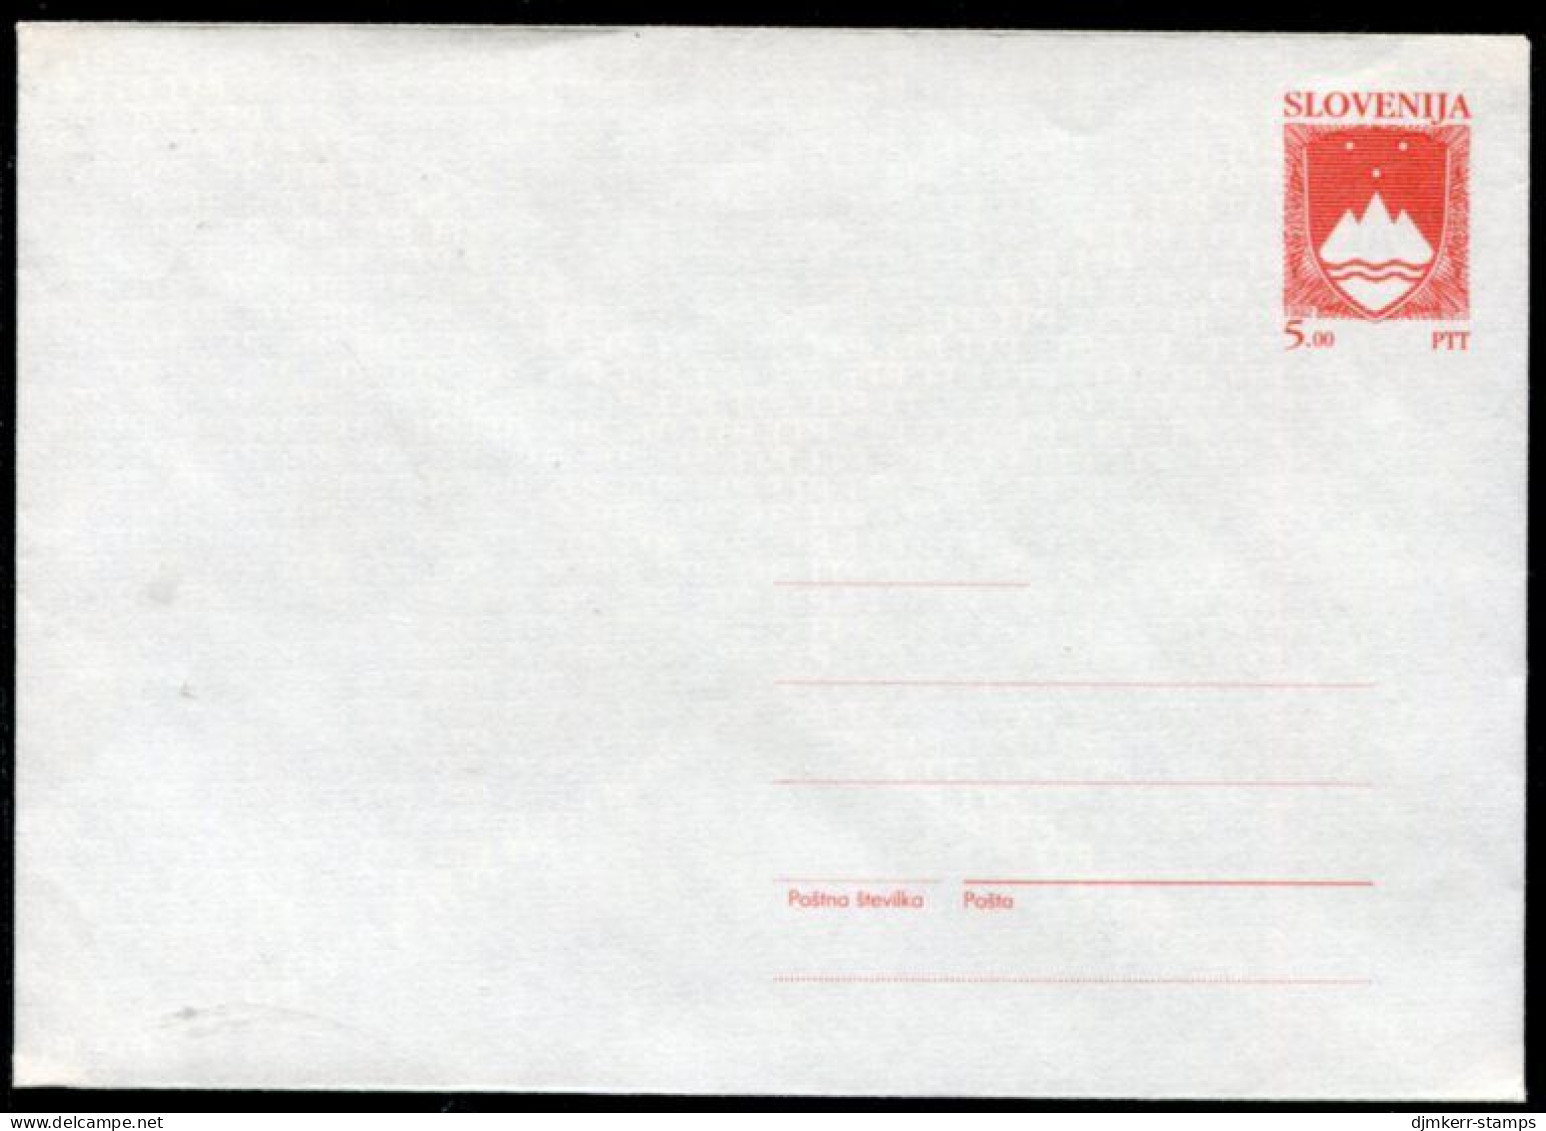 SLOVENIA 1992 5.00 T.  Postal Stationery Envelope On White Paper, Unused.  Michel U1a - Eslovenia